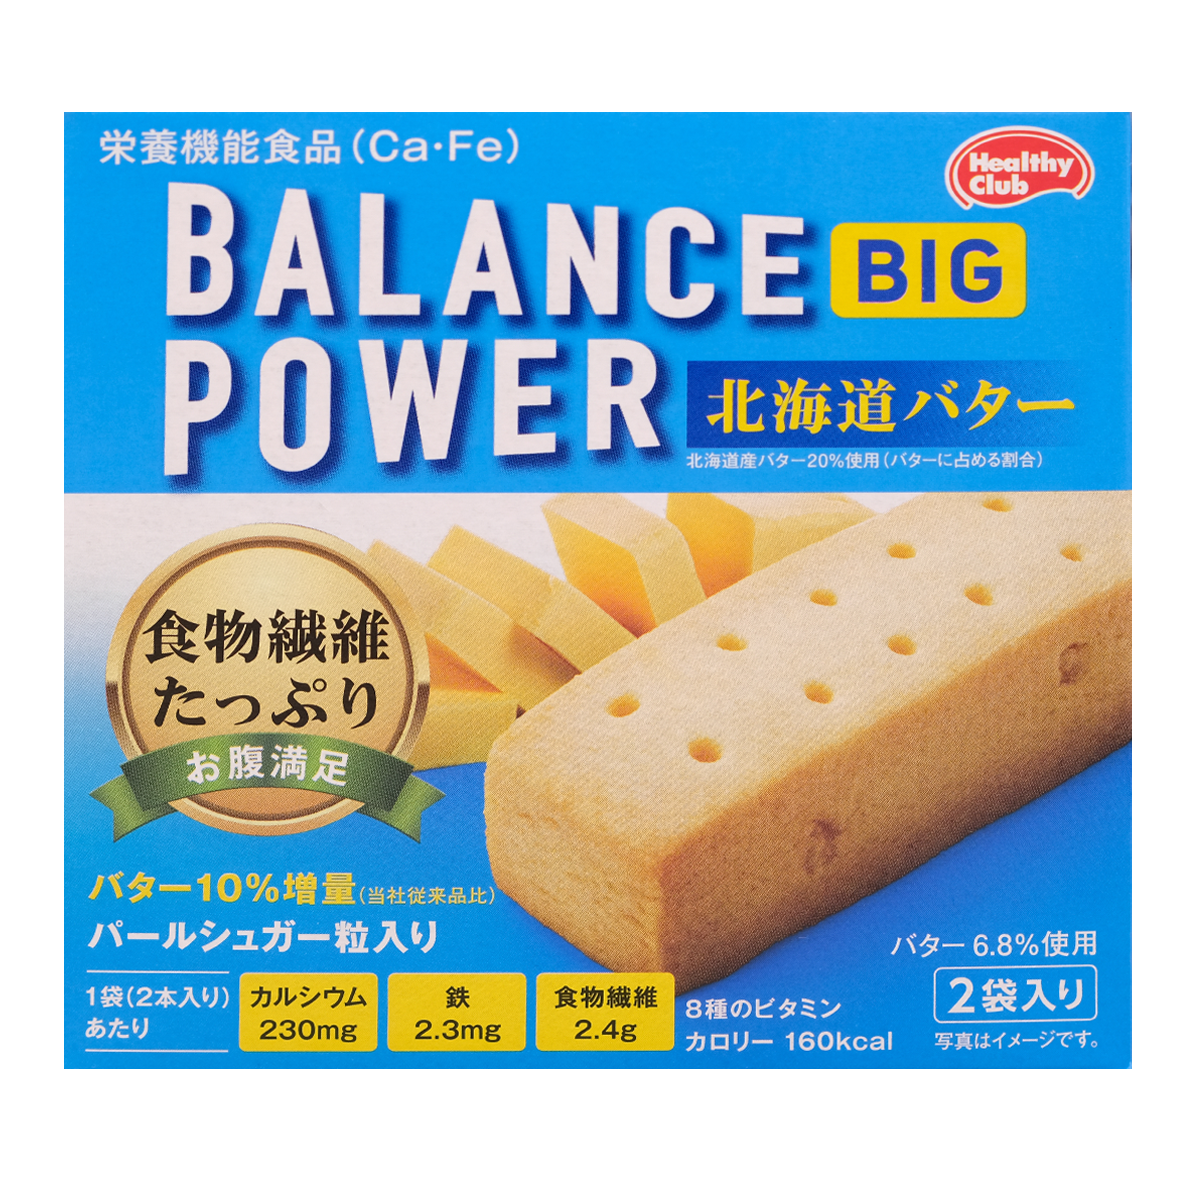 Balance Power Big 北海道牛油味曲奇